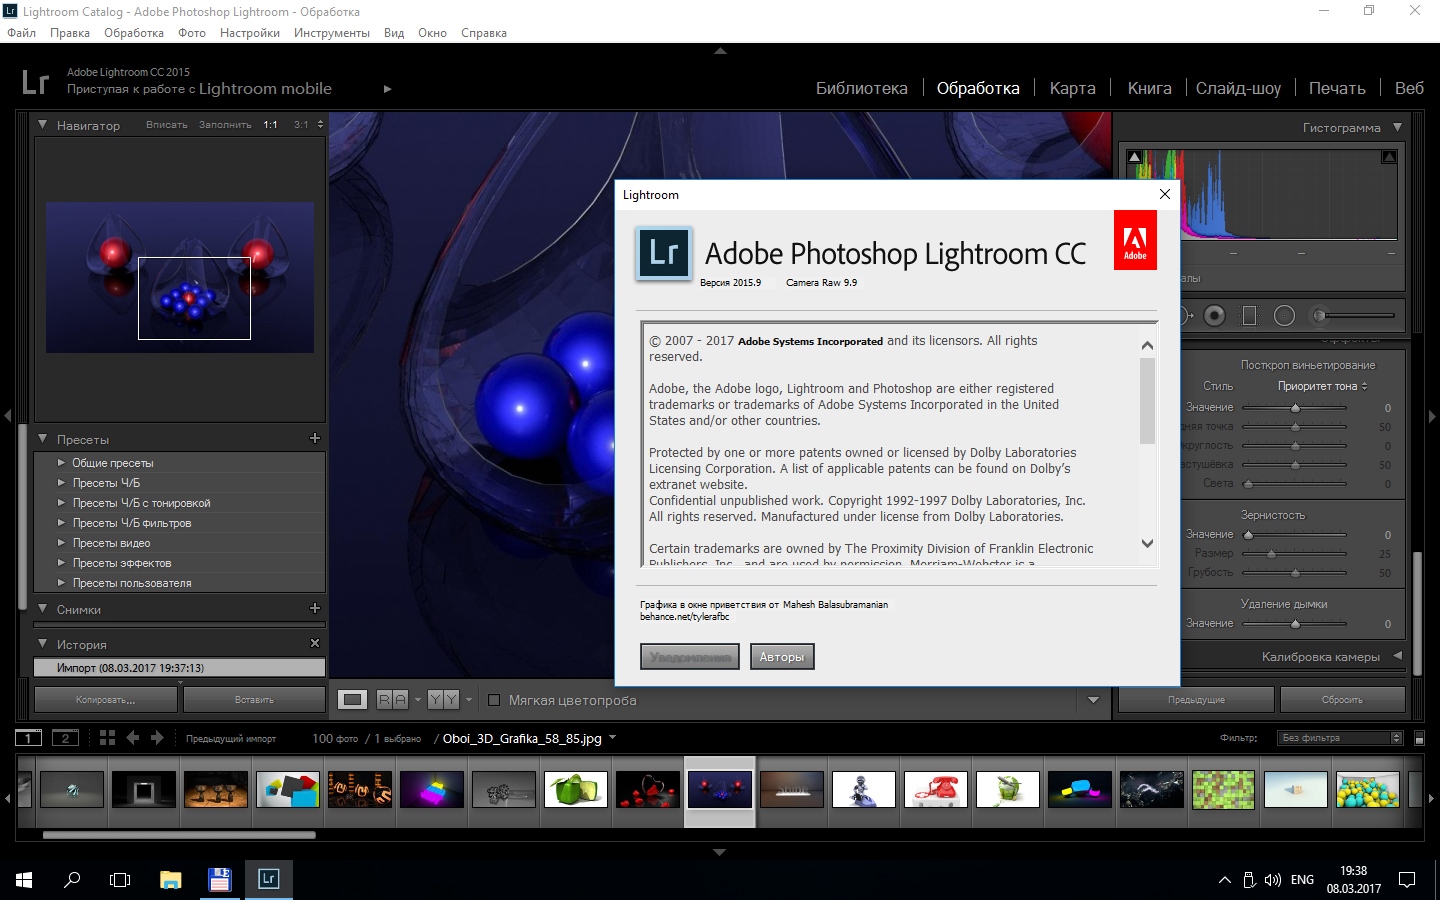 Adobe Photoshop Lightroom CC 6.9 Multilang crack